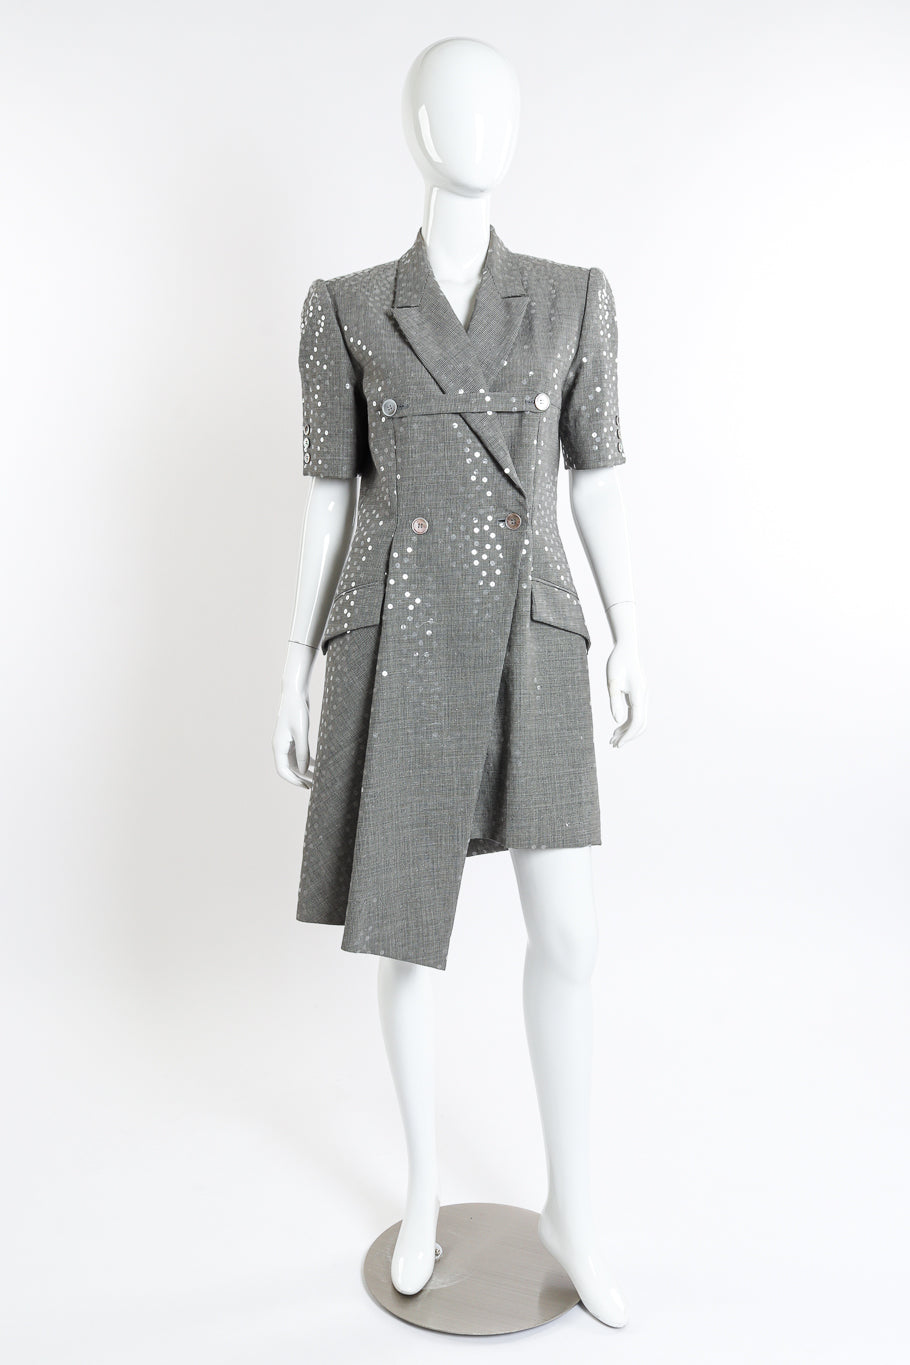 Vintage Givenchy Plaid Sequin Dress front on mannequin @recessla